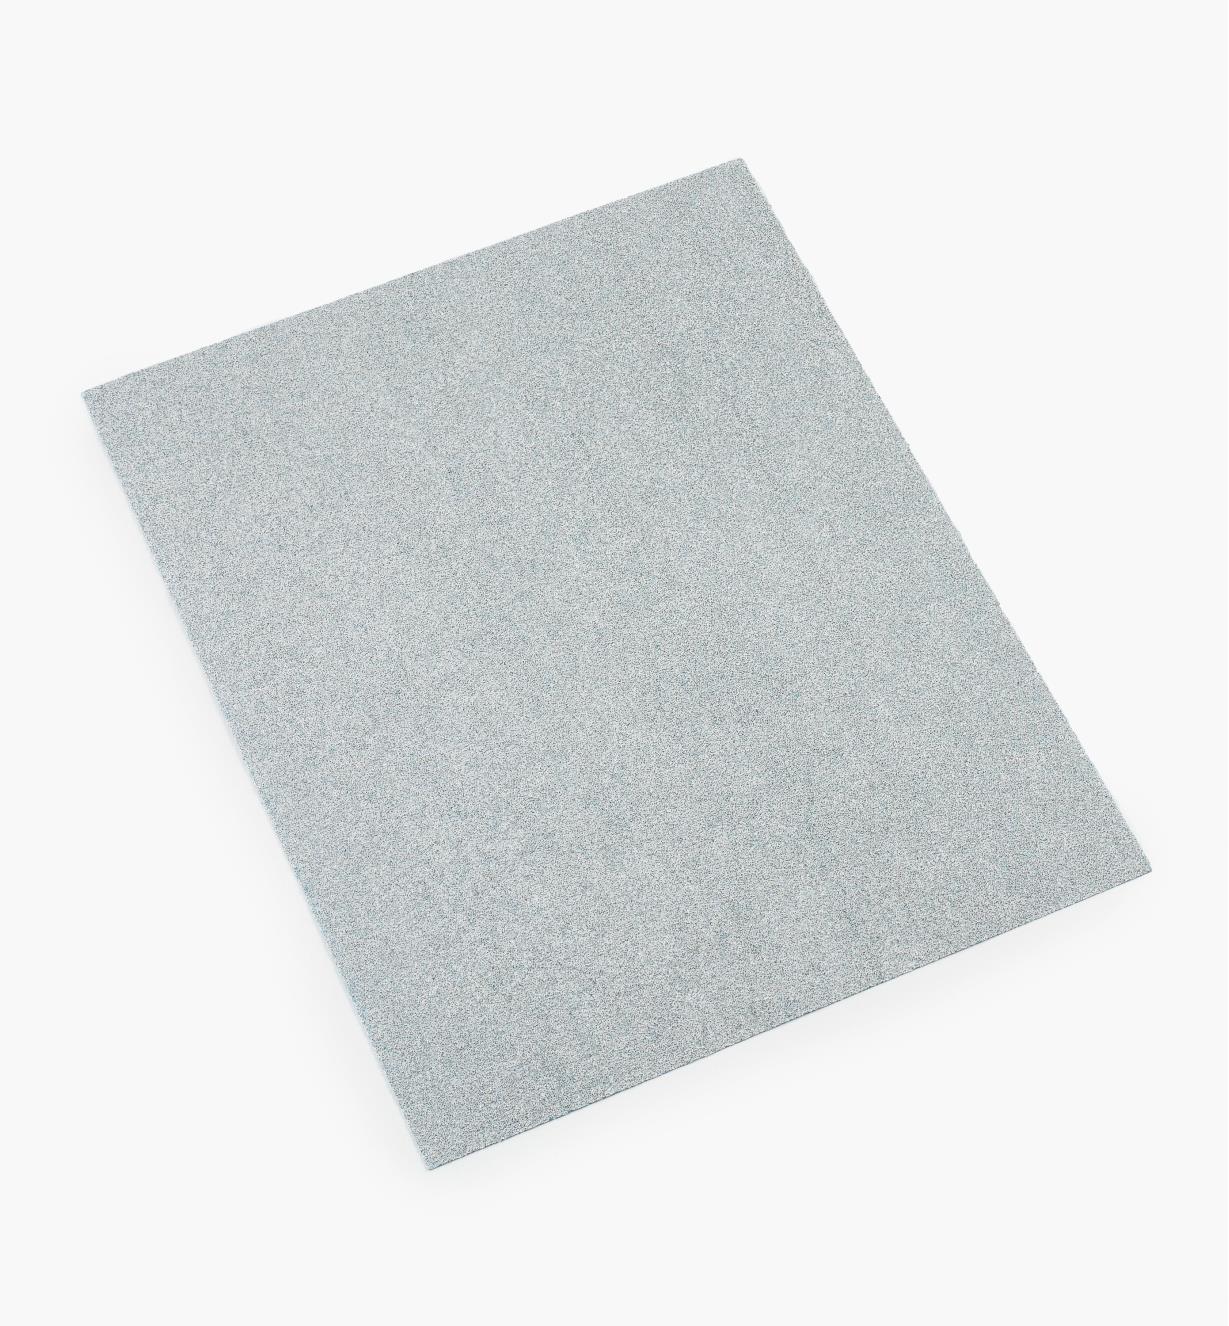 54K8501 - 3X Sandpaper 60x, each